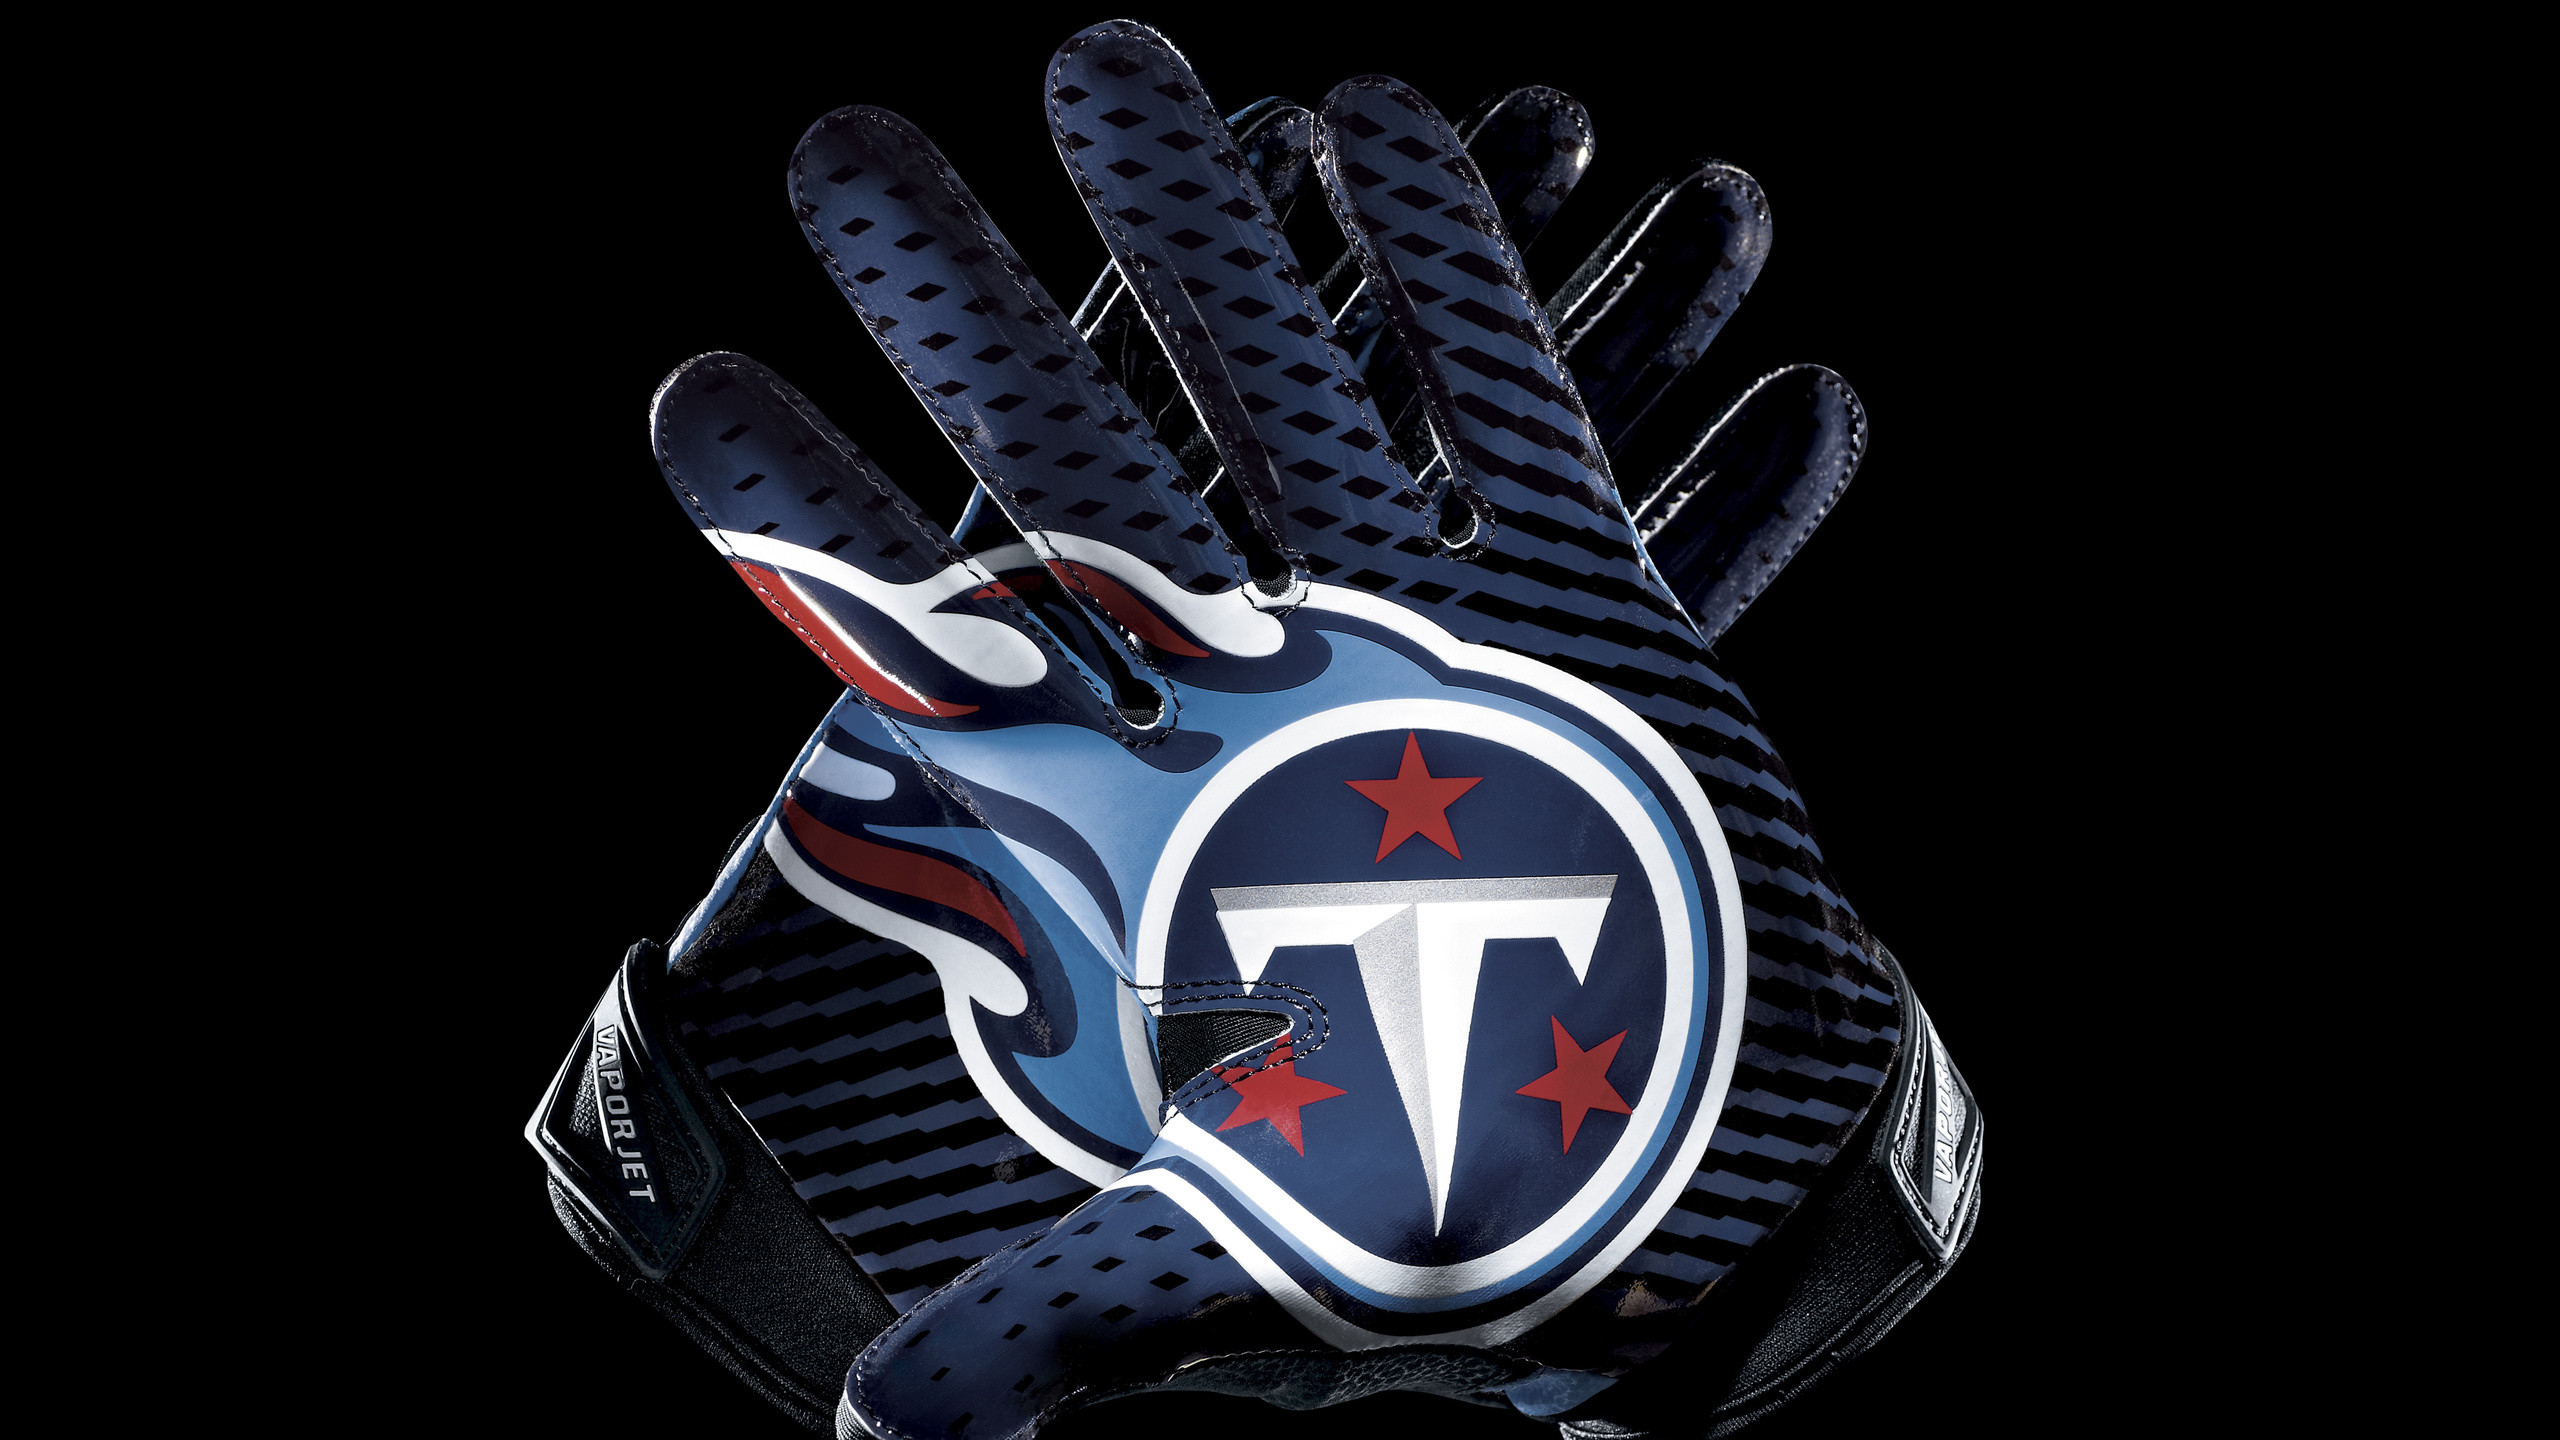 2560x1440 Nfl, Sports, Tennessee Titans American Football, Tennessee Titans, Tennessee  Titans Nfl,